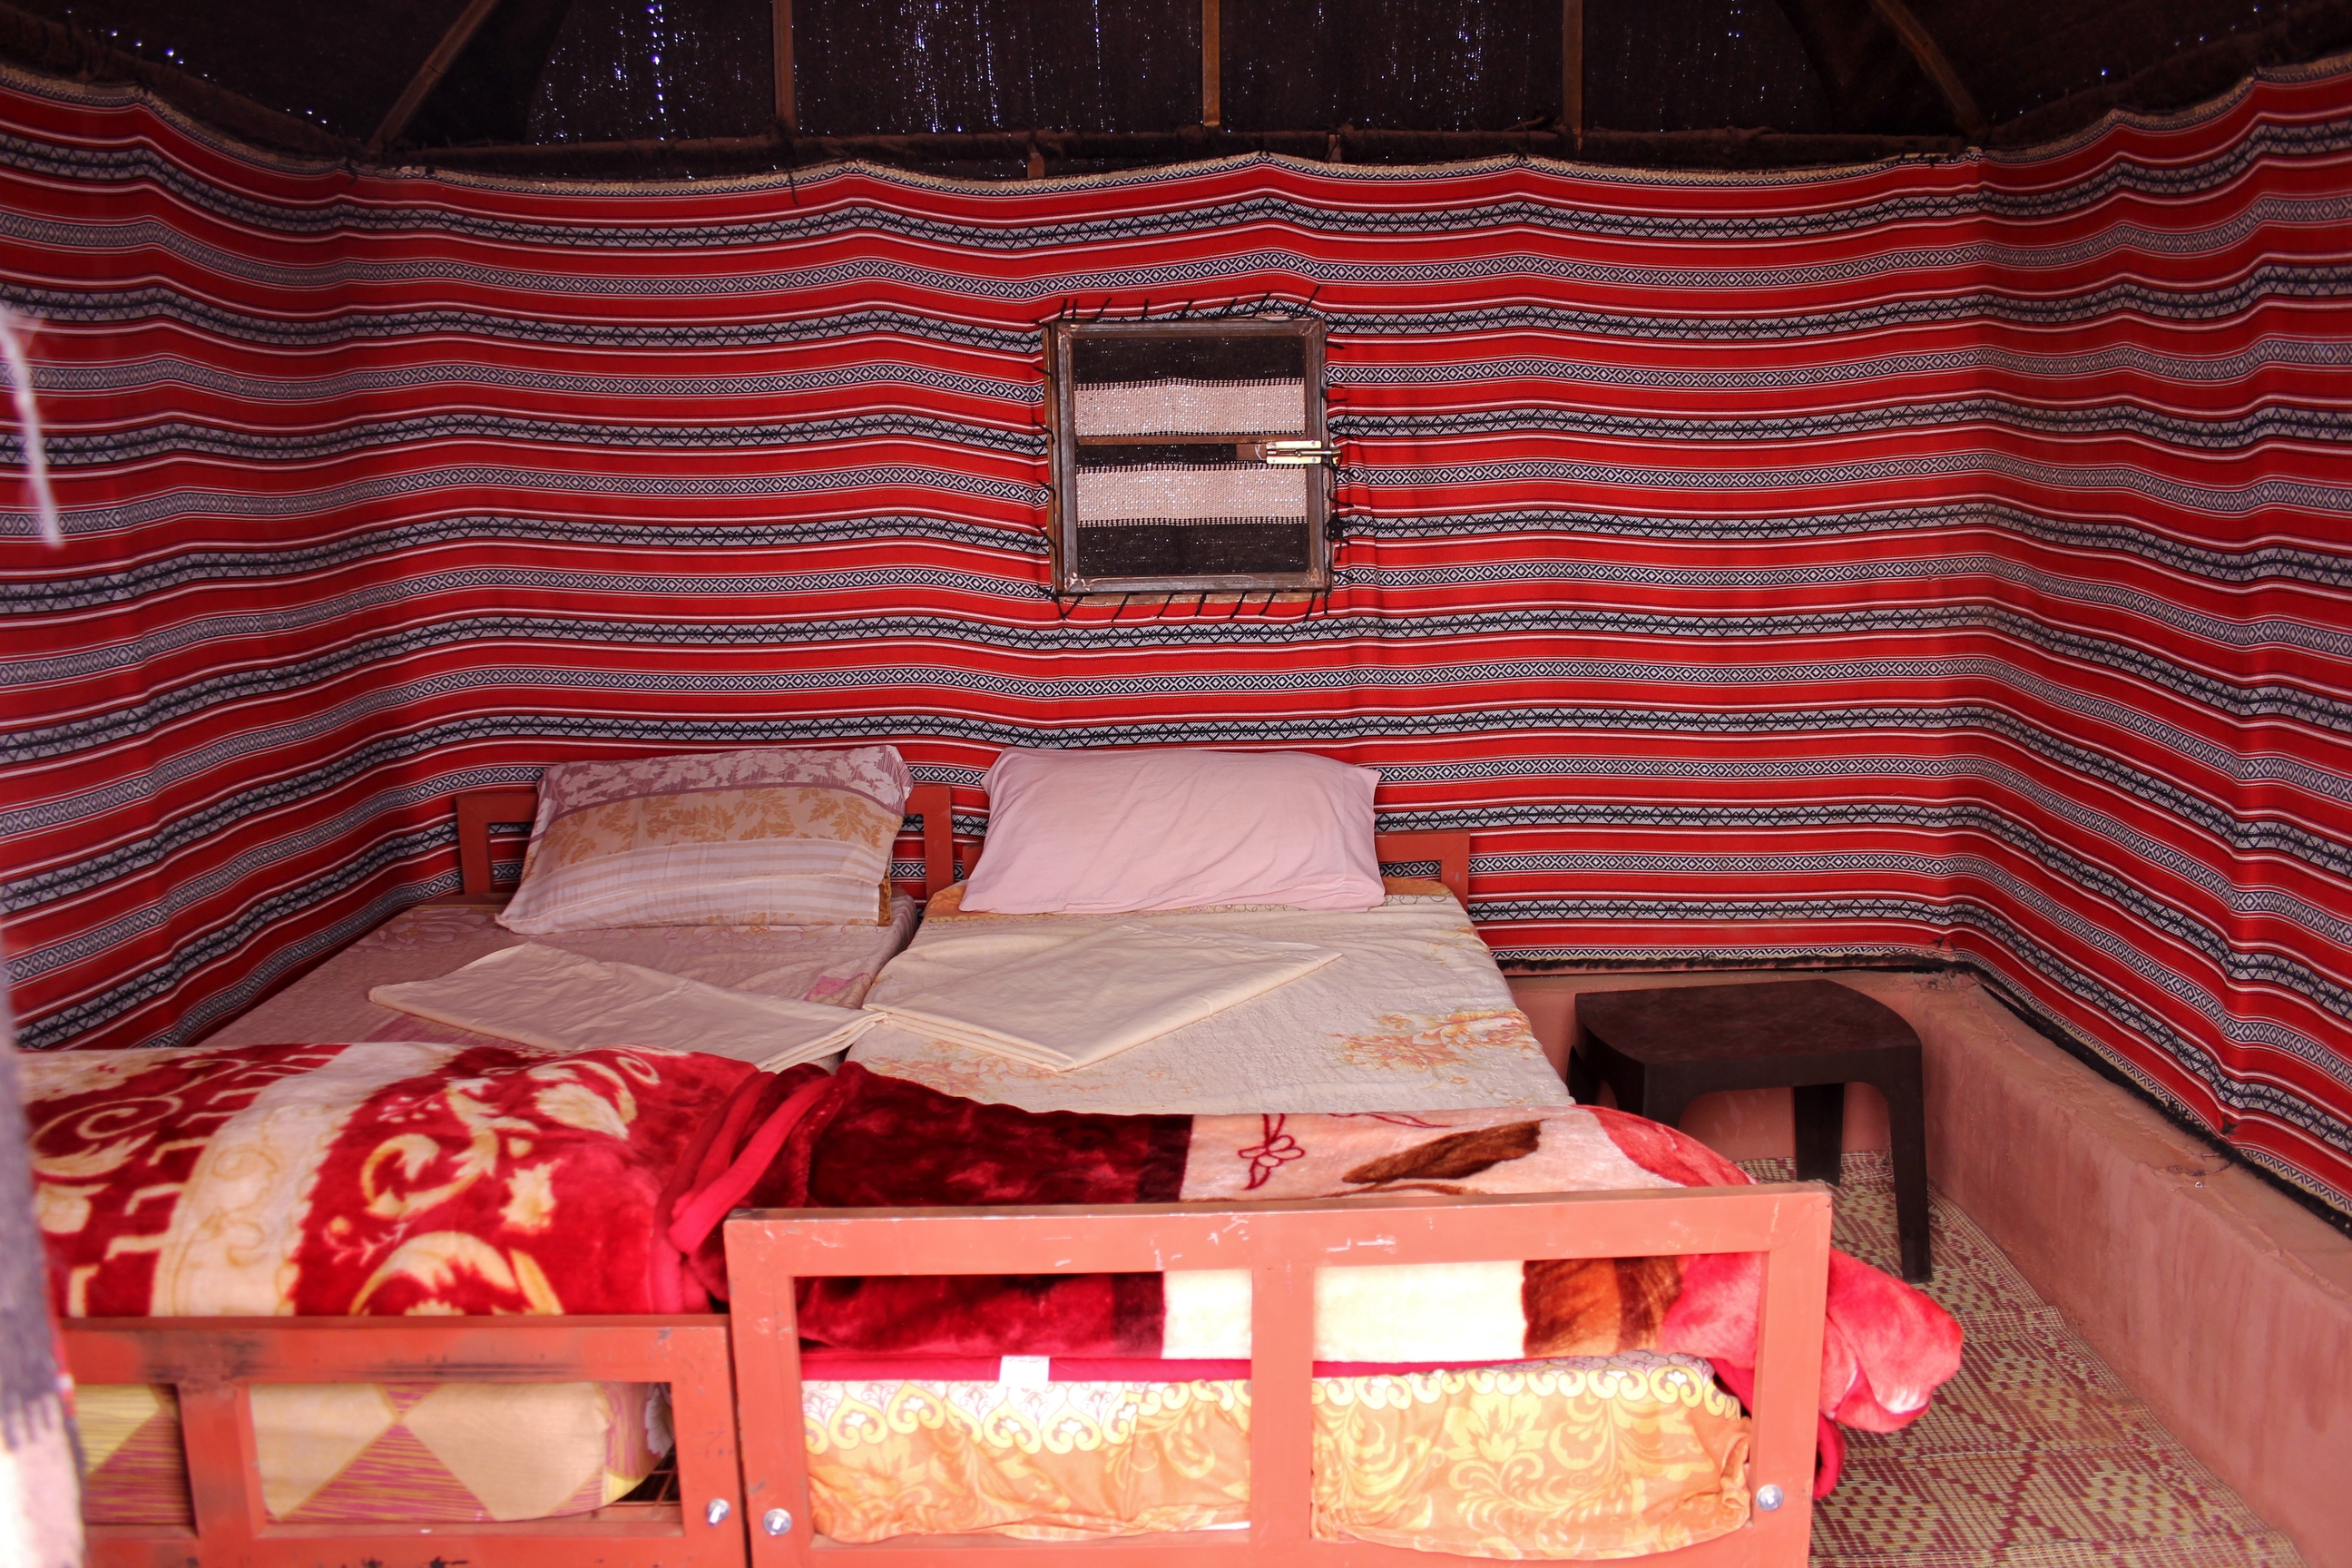 Inside my tent cabin in Wadi Rum